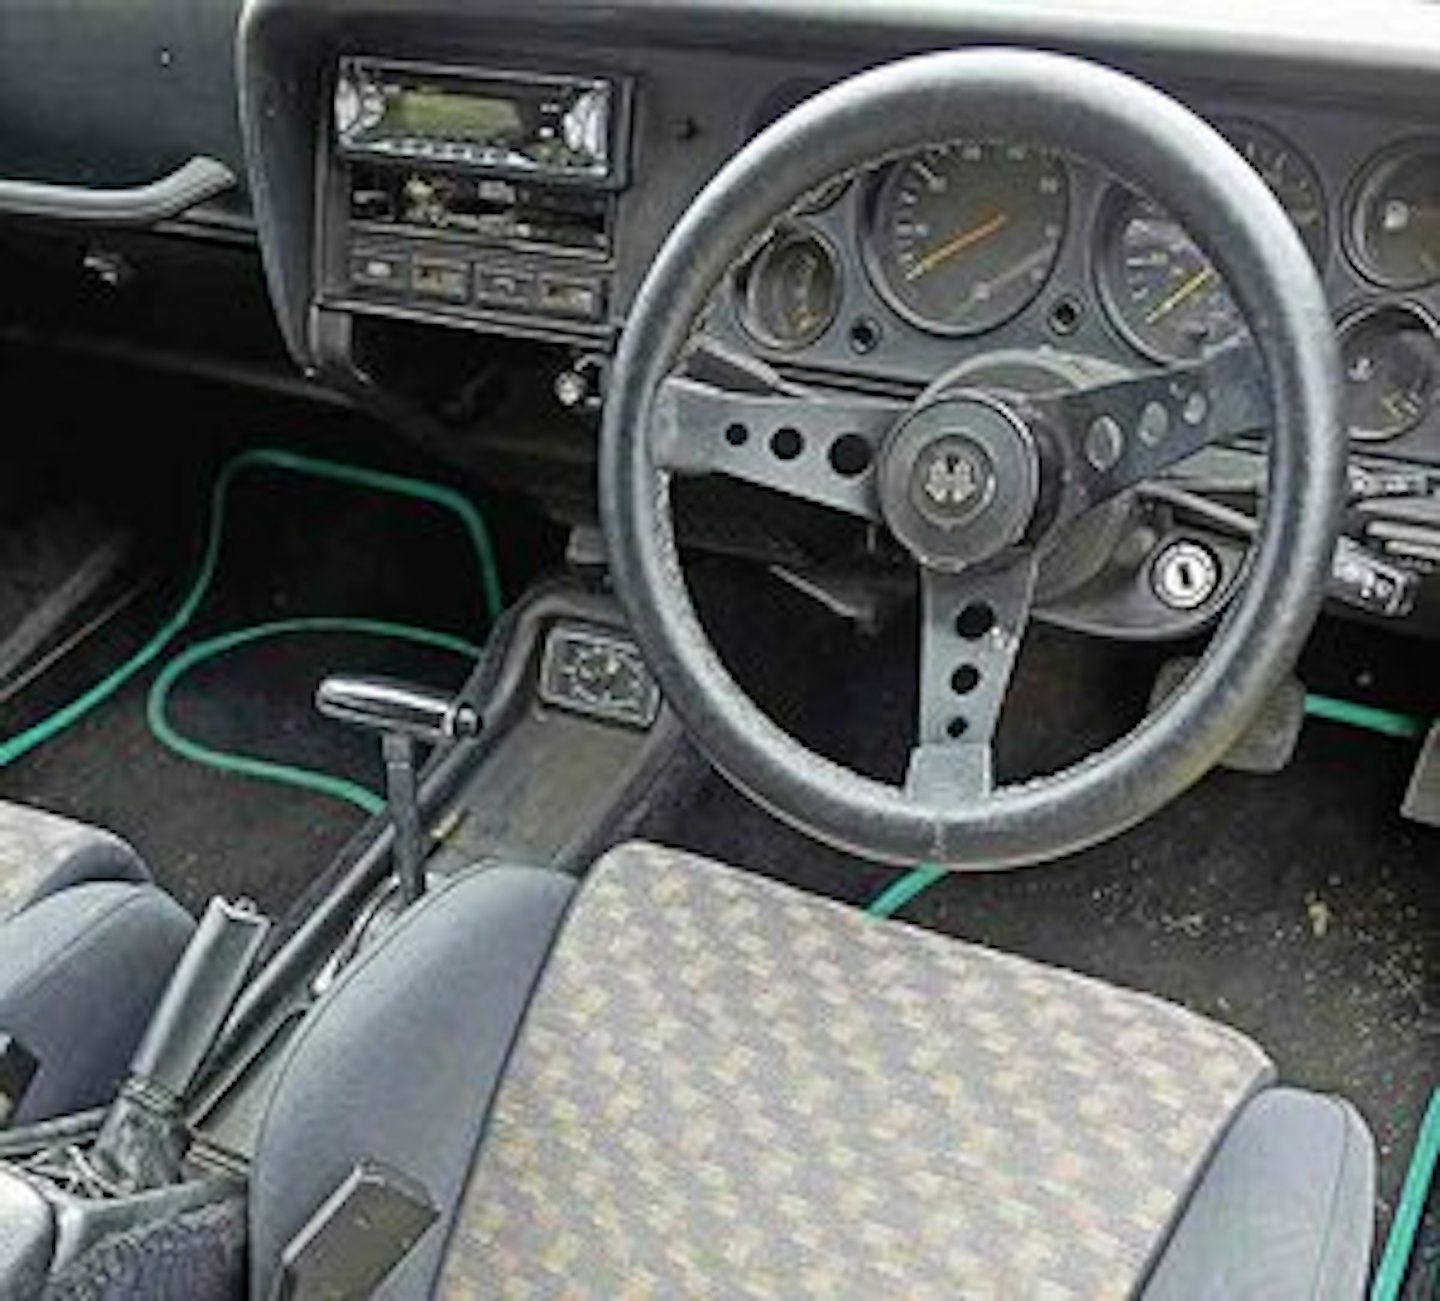 1979 Ford Capri